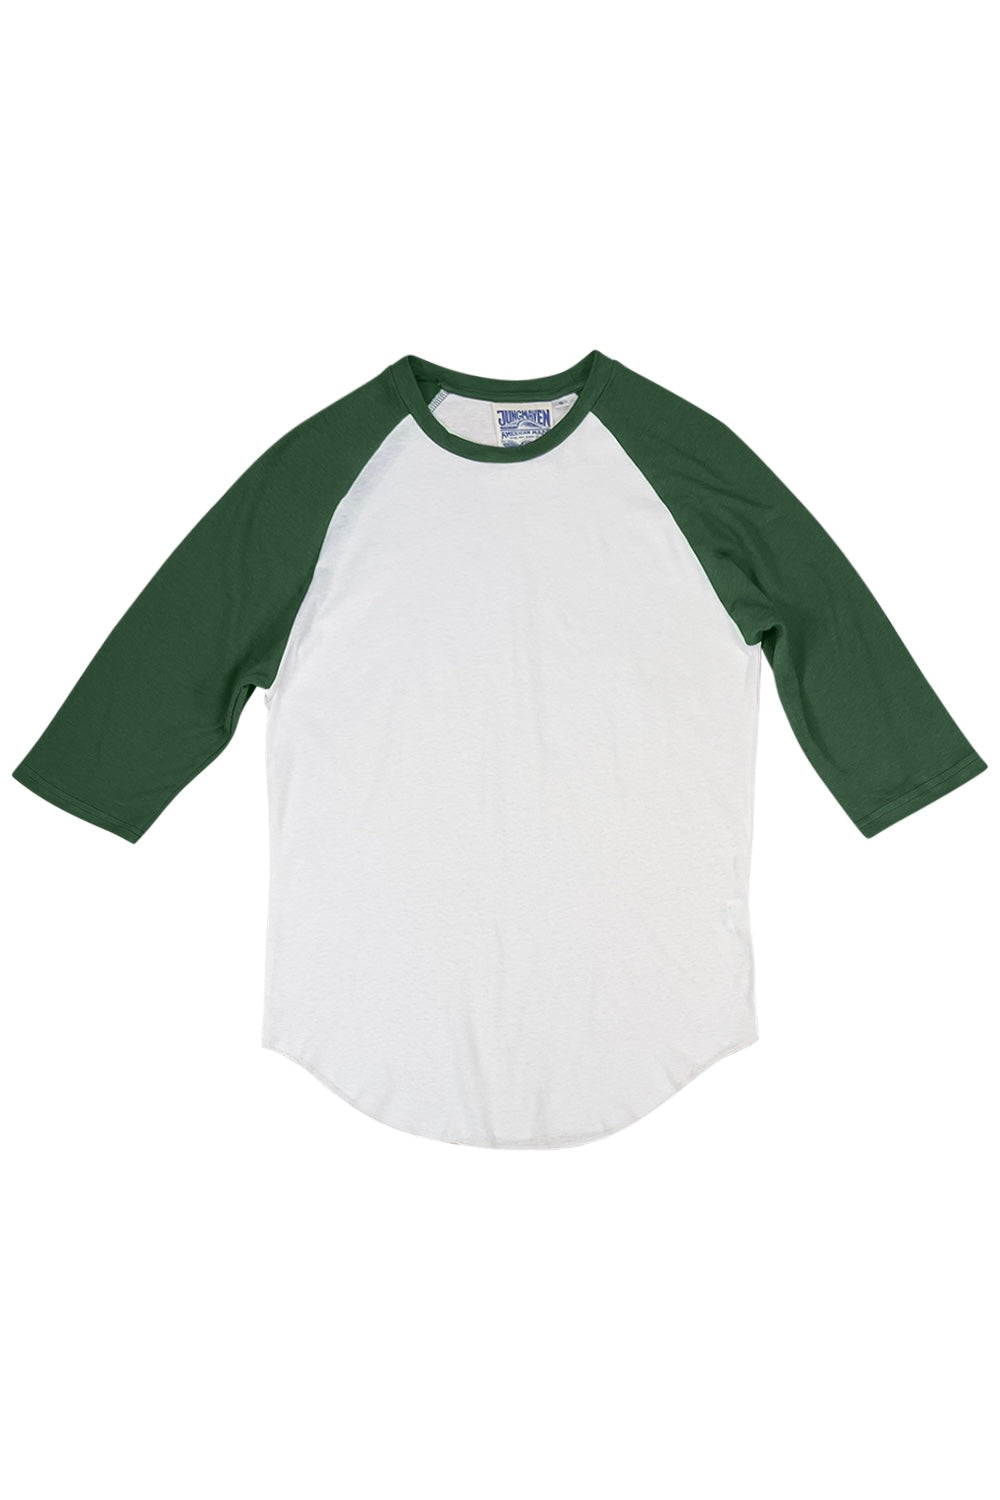 Stones 3/4 Sleeve Raglan | Jungmaven Hemp Clothing & Accessories / Color: Hunter Green Sleeve / White Body